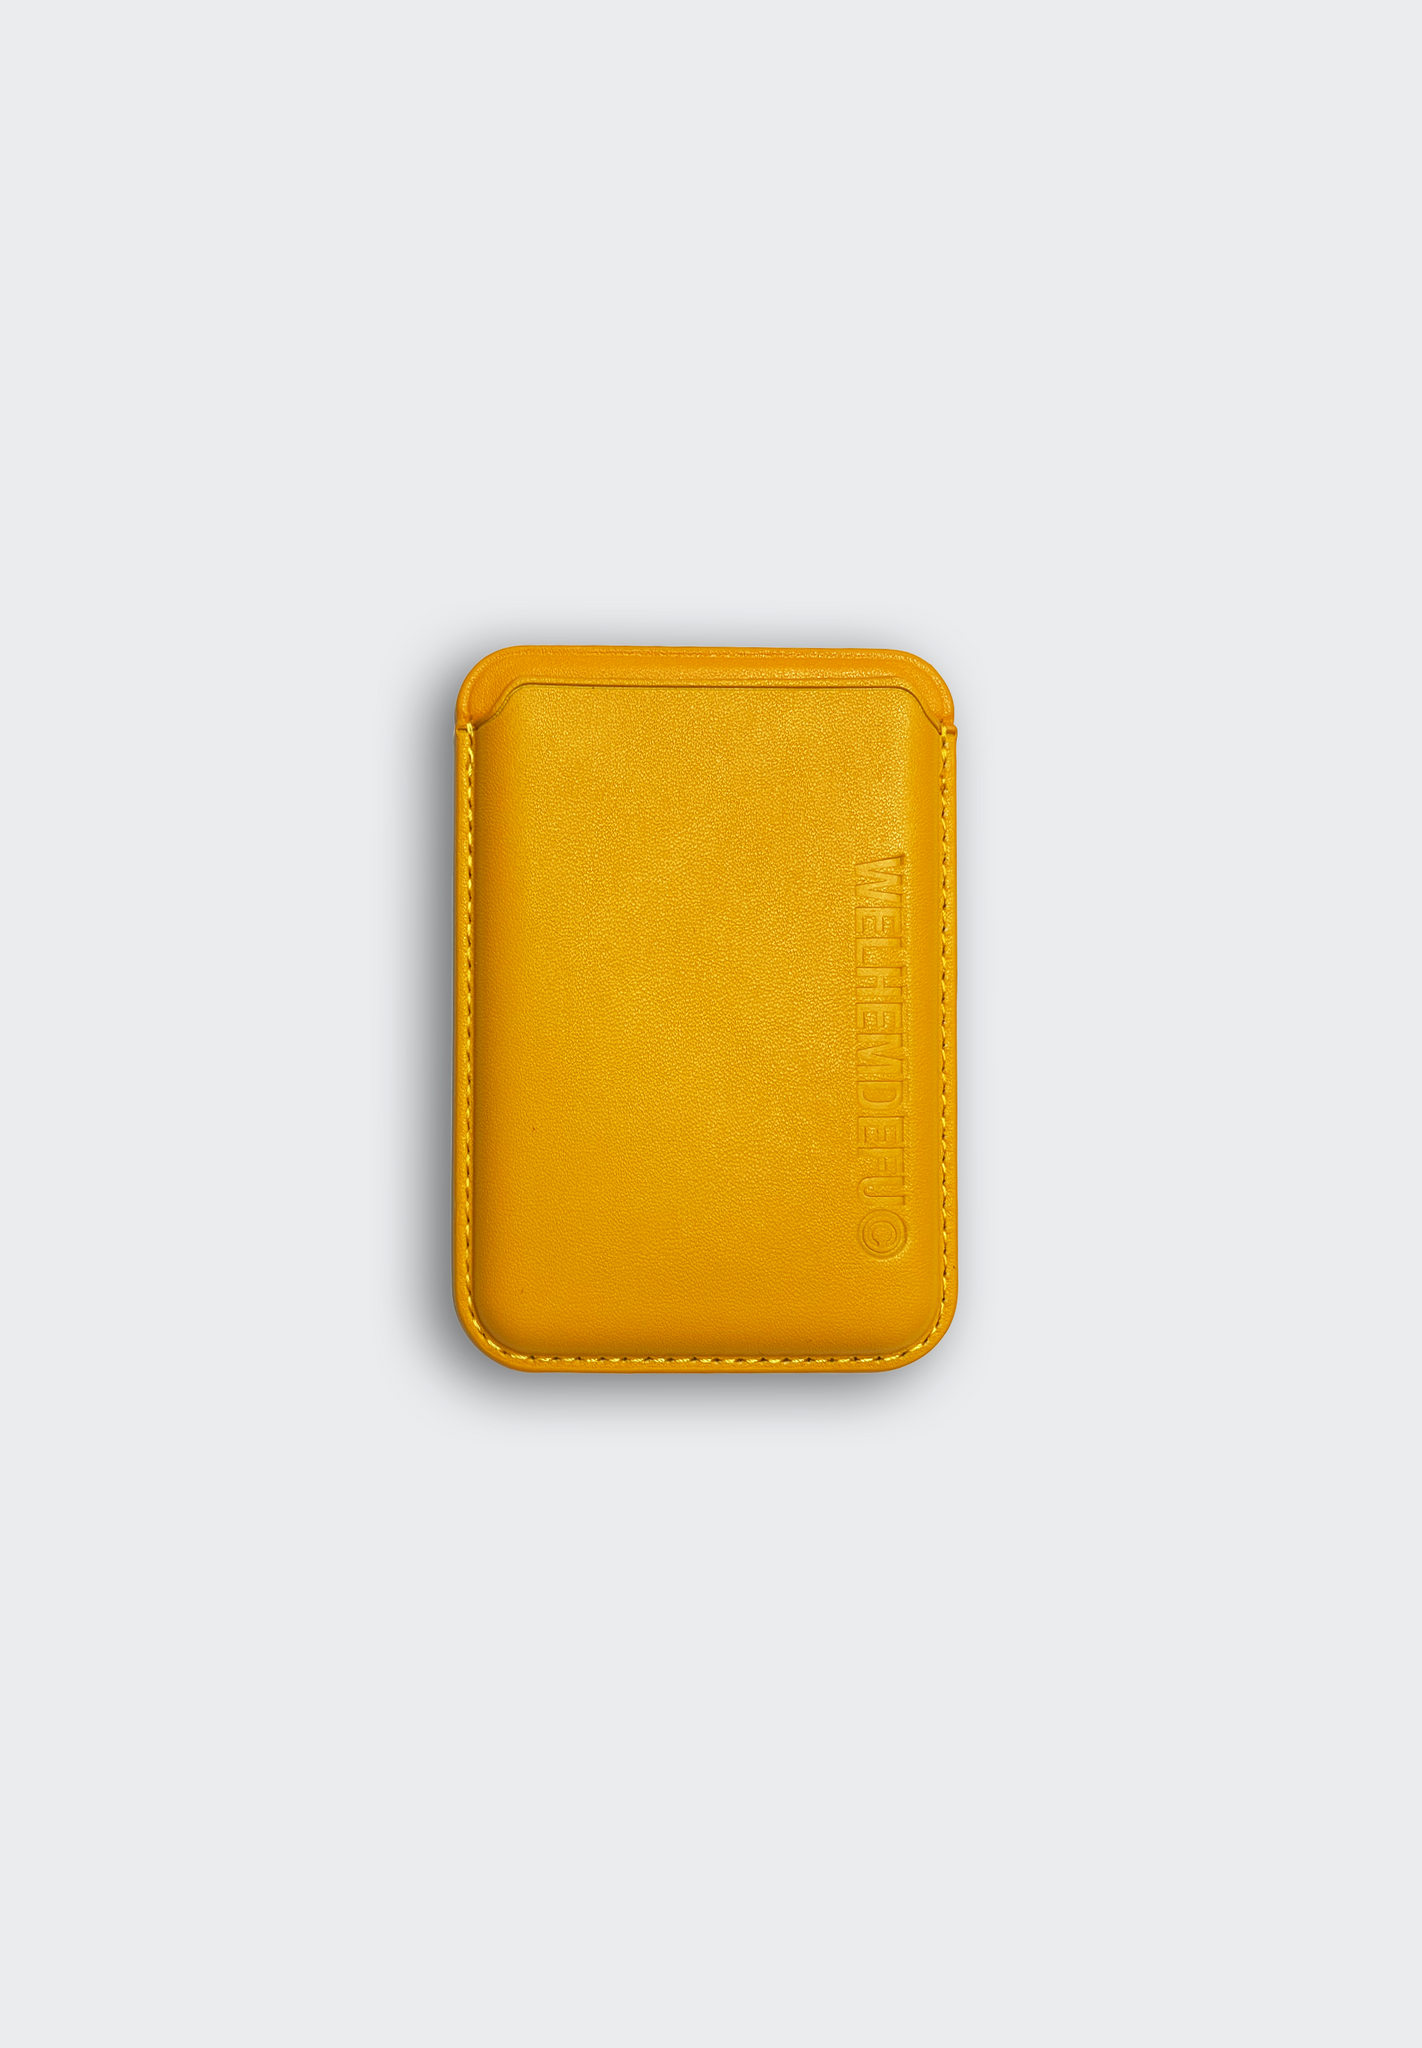 MagSafe Wallet